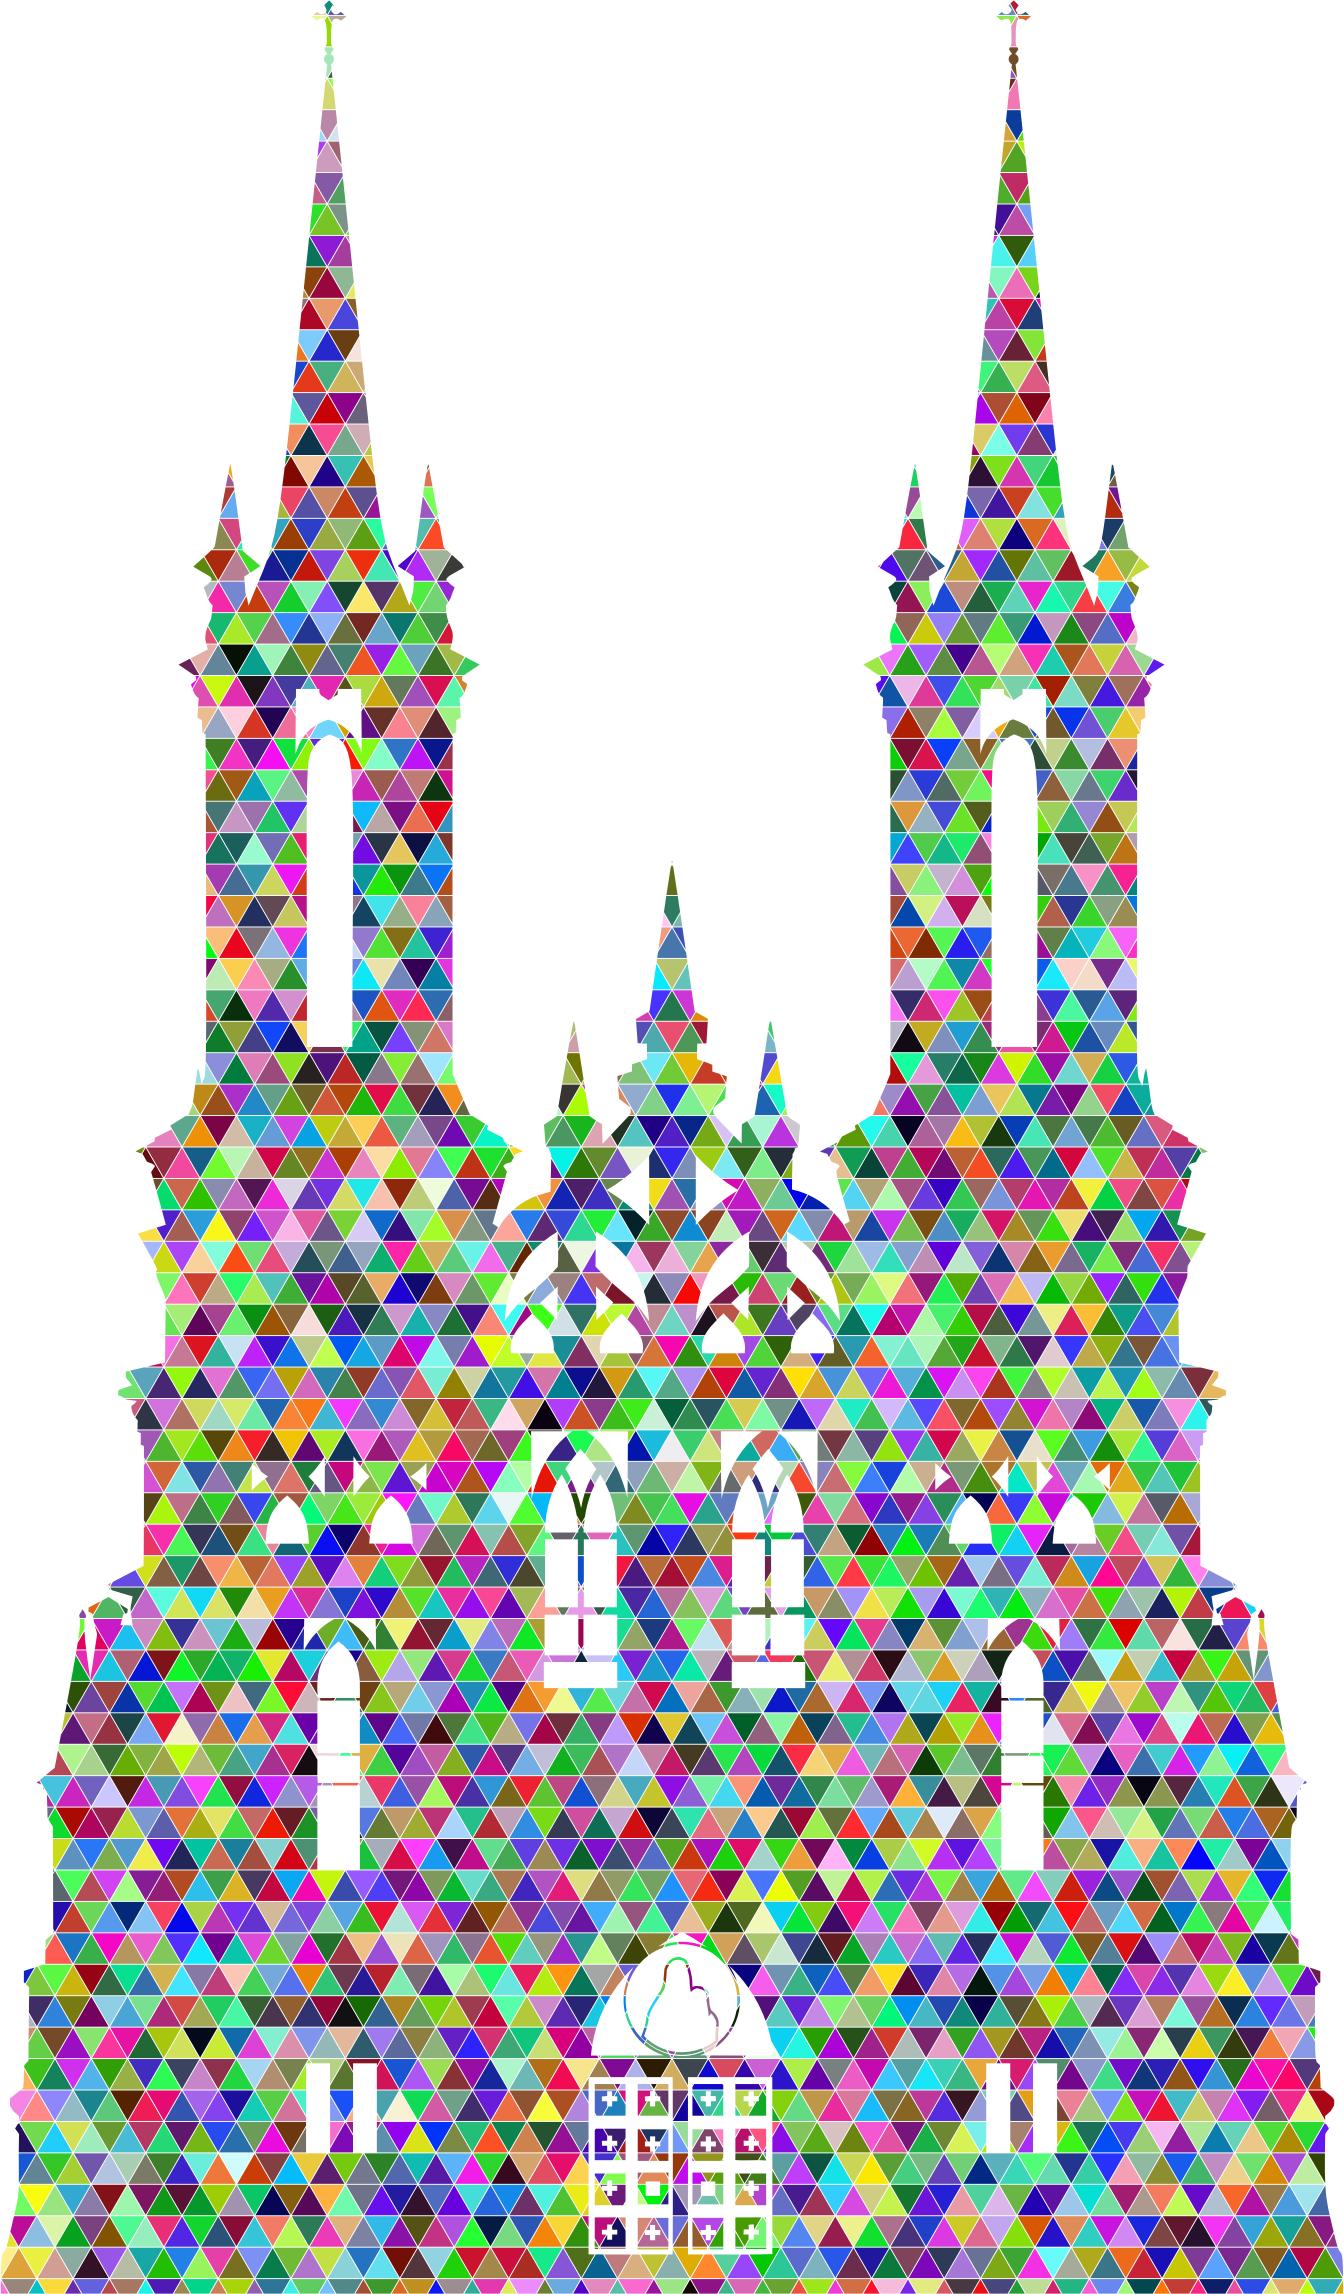 Prismatic Triangular Mosaic Gothic Castle icons